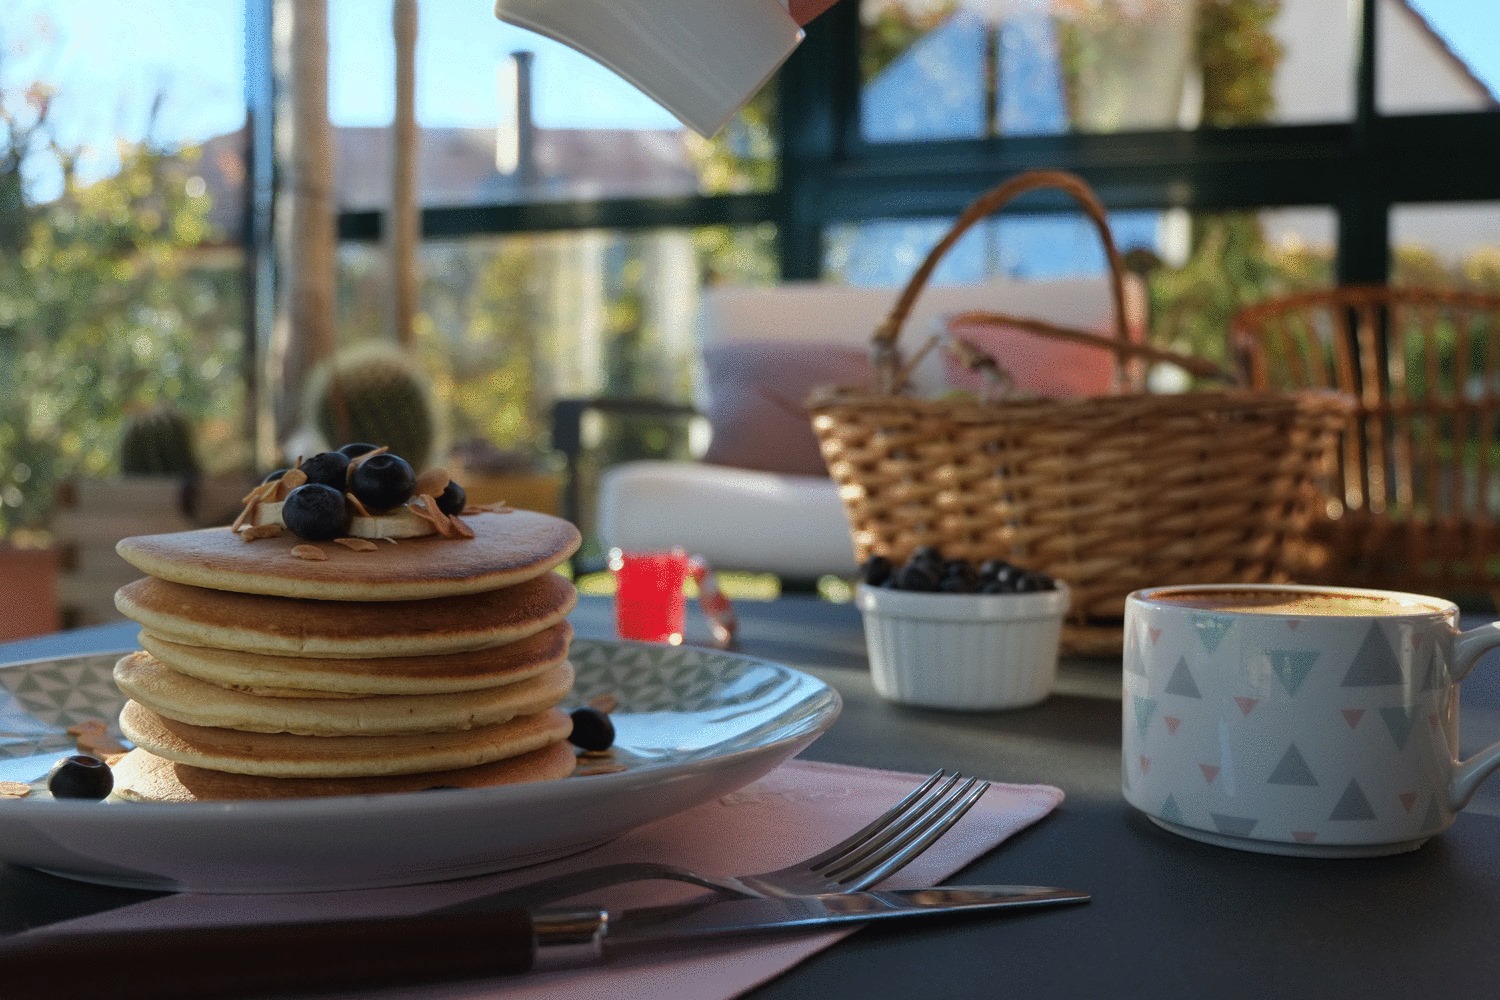 2021/08/yummy-pancakes-5.jpg